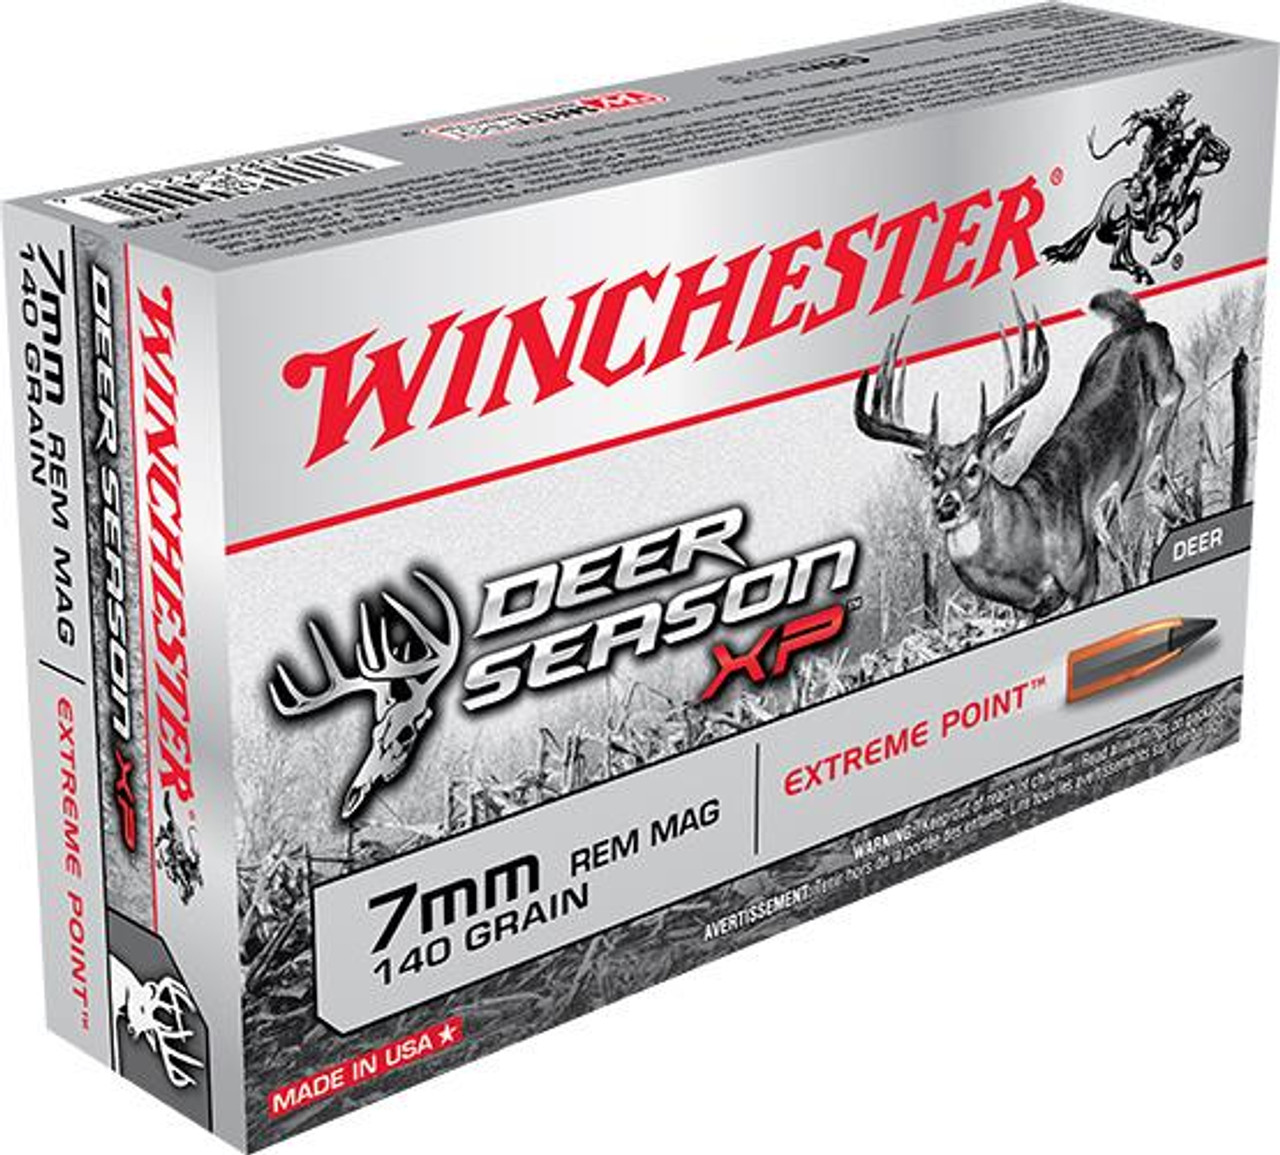 Winchester Deer Season XP 7mm Remington Magnum 140 gr Extreme Point Polymer Tip 20 rds.